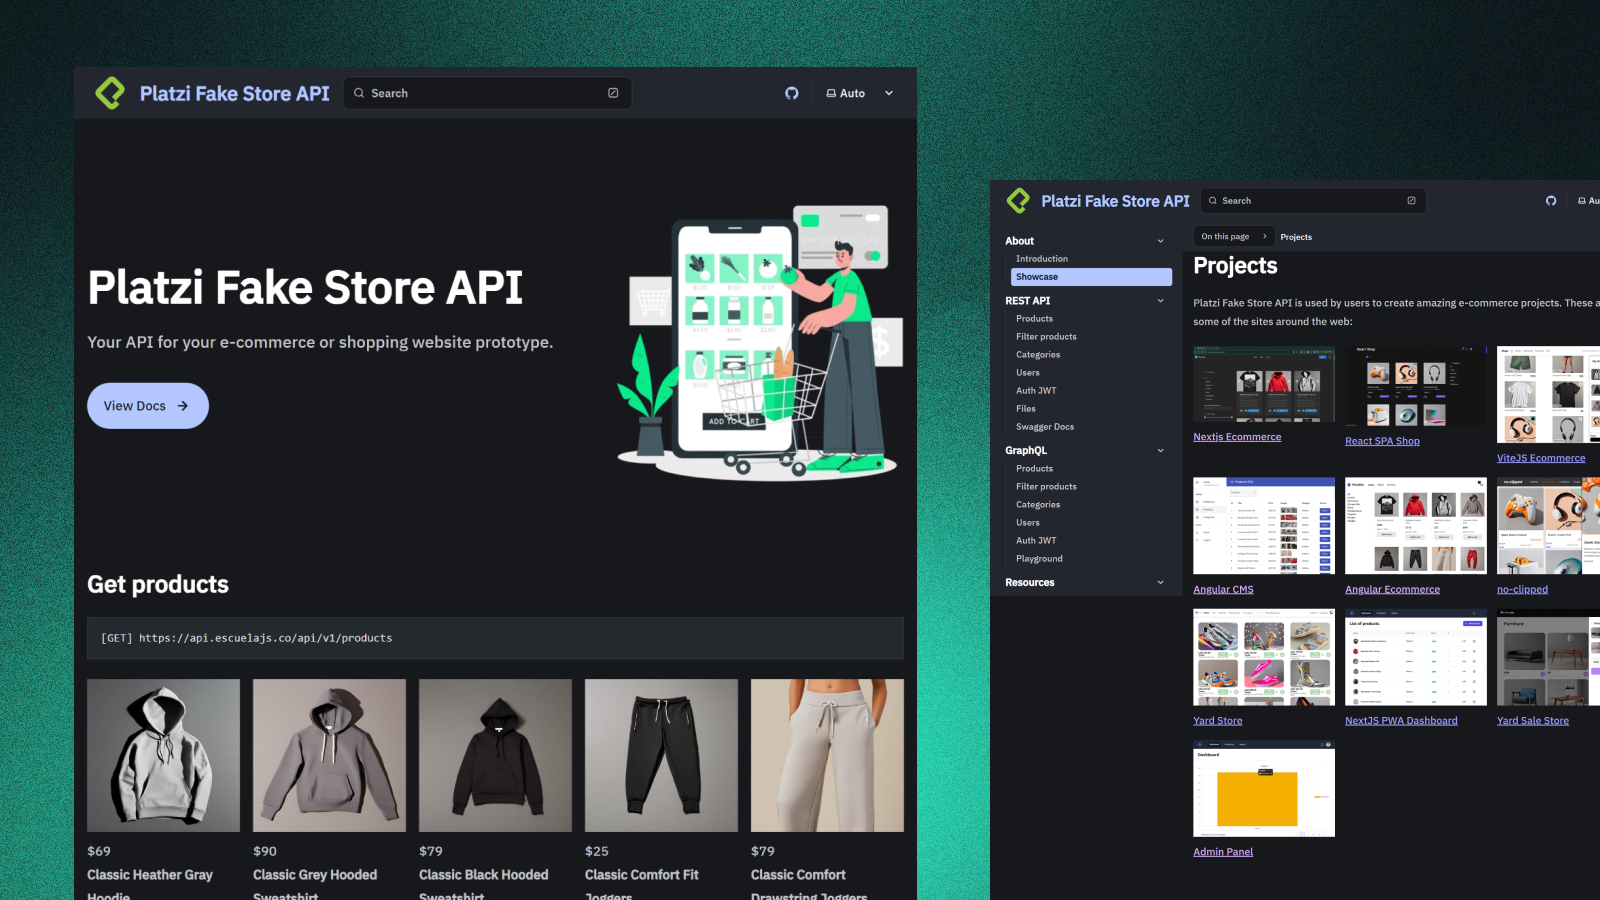 Platzi Fake Store API